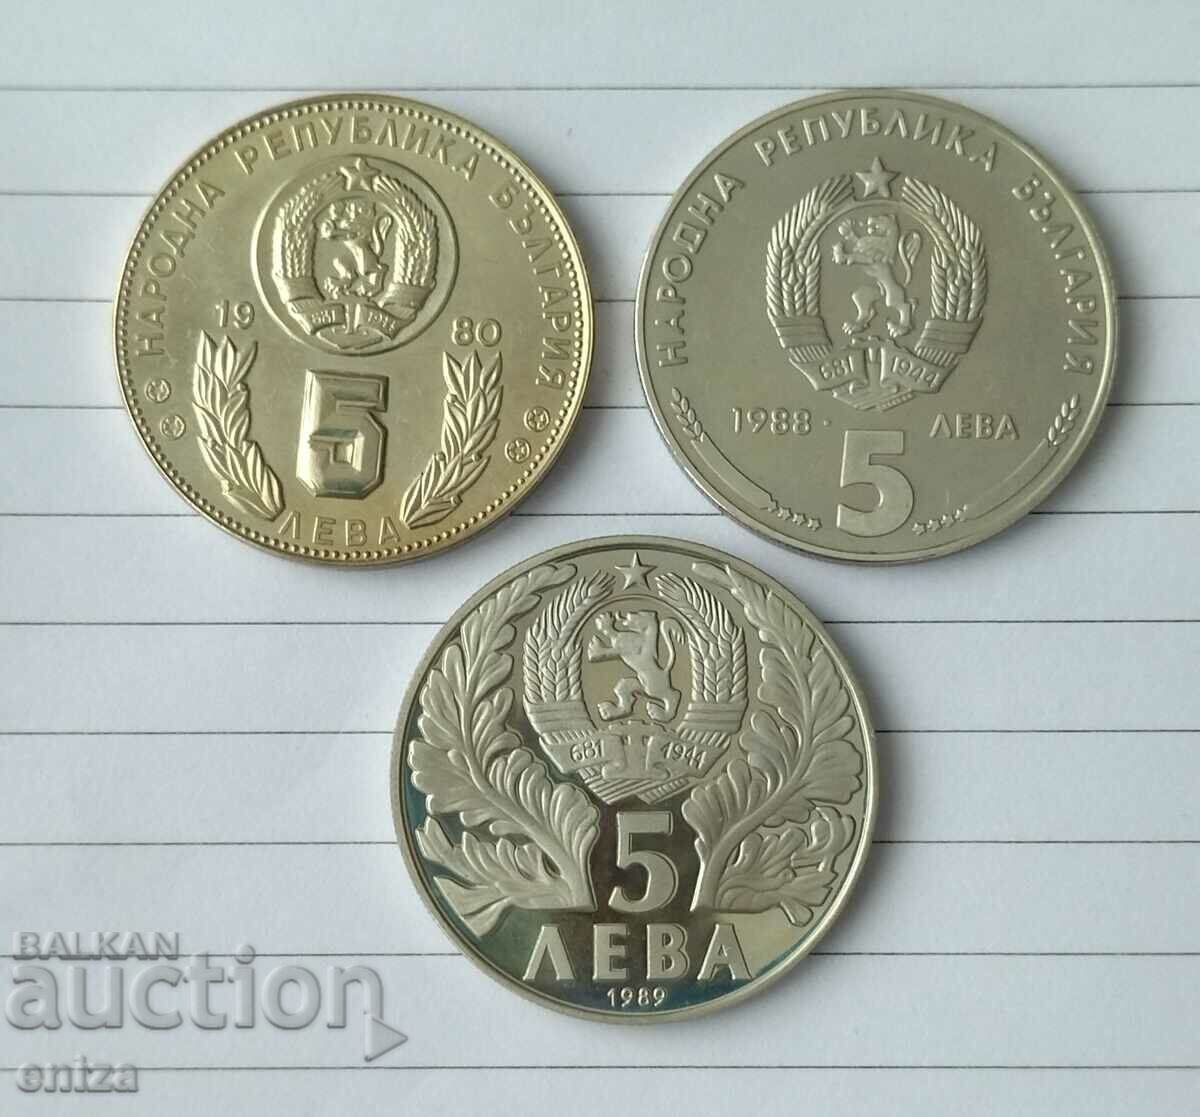 3 social jubilee coins of BGN 5 each